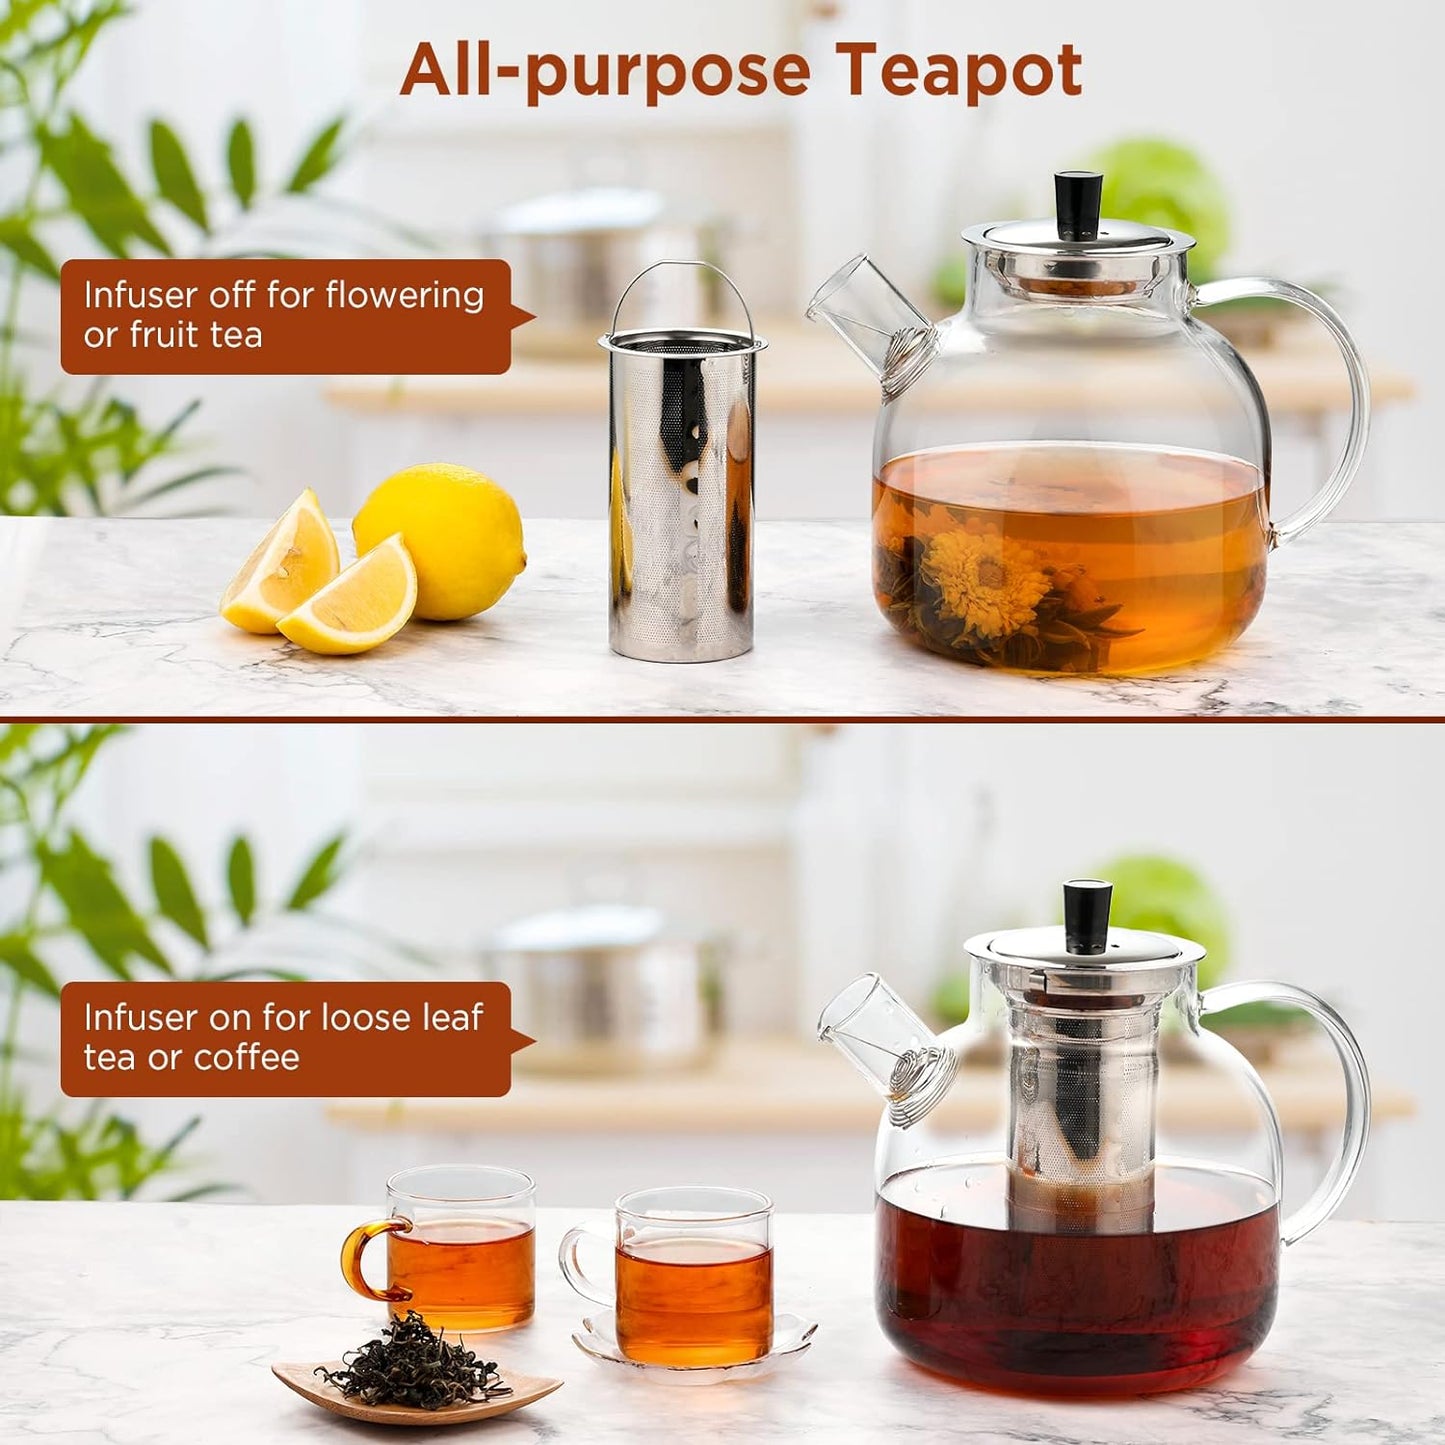 1500ml(52oz) Glass Teapot: Stovetop Safe, Removable Infuser, Ideal for Blooming & Loose Leaf Tea